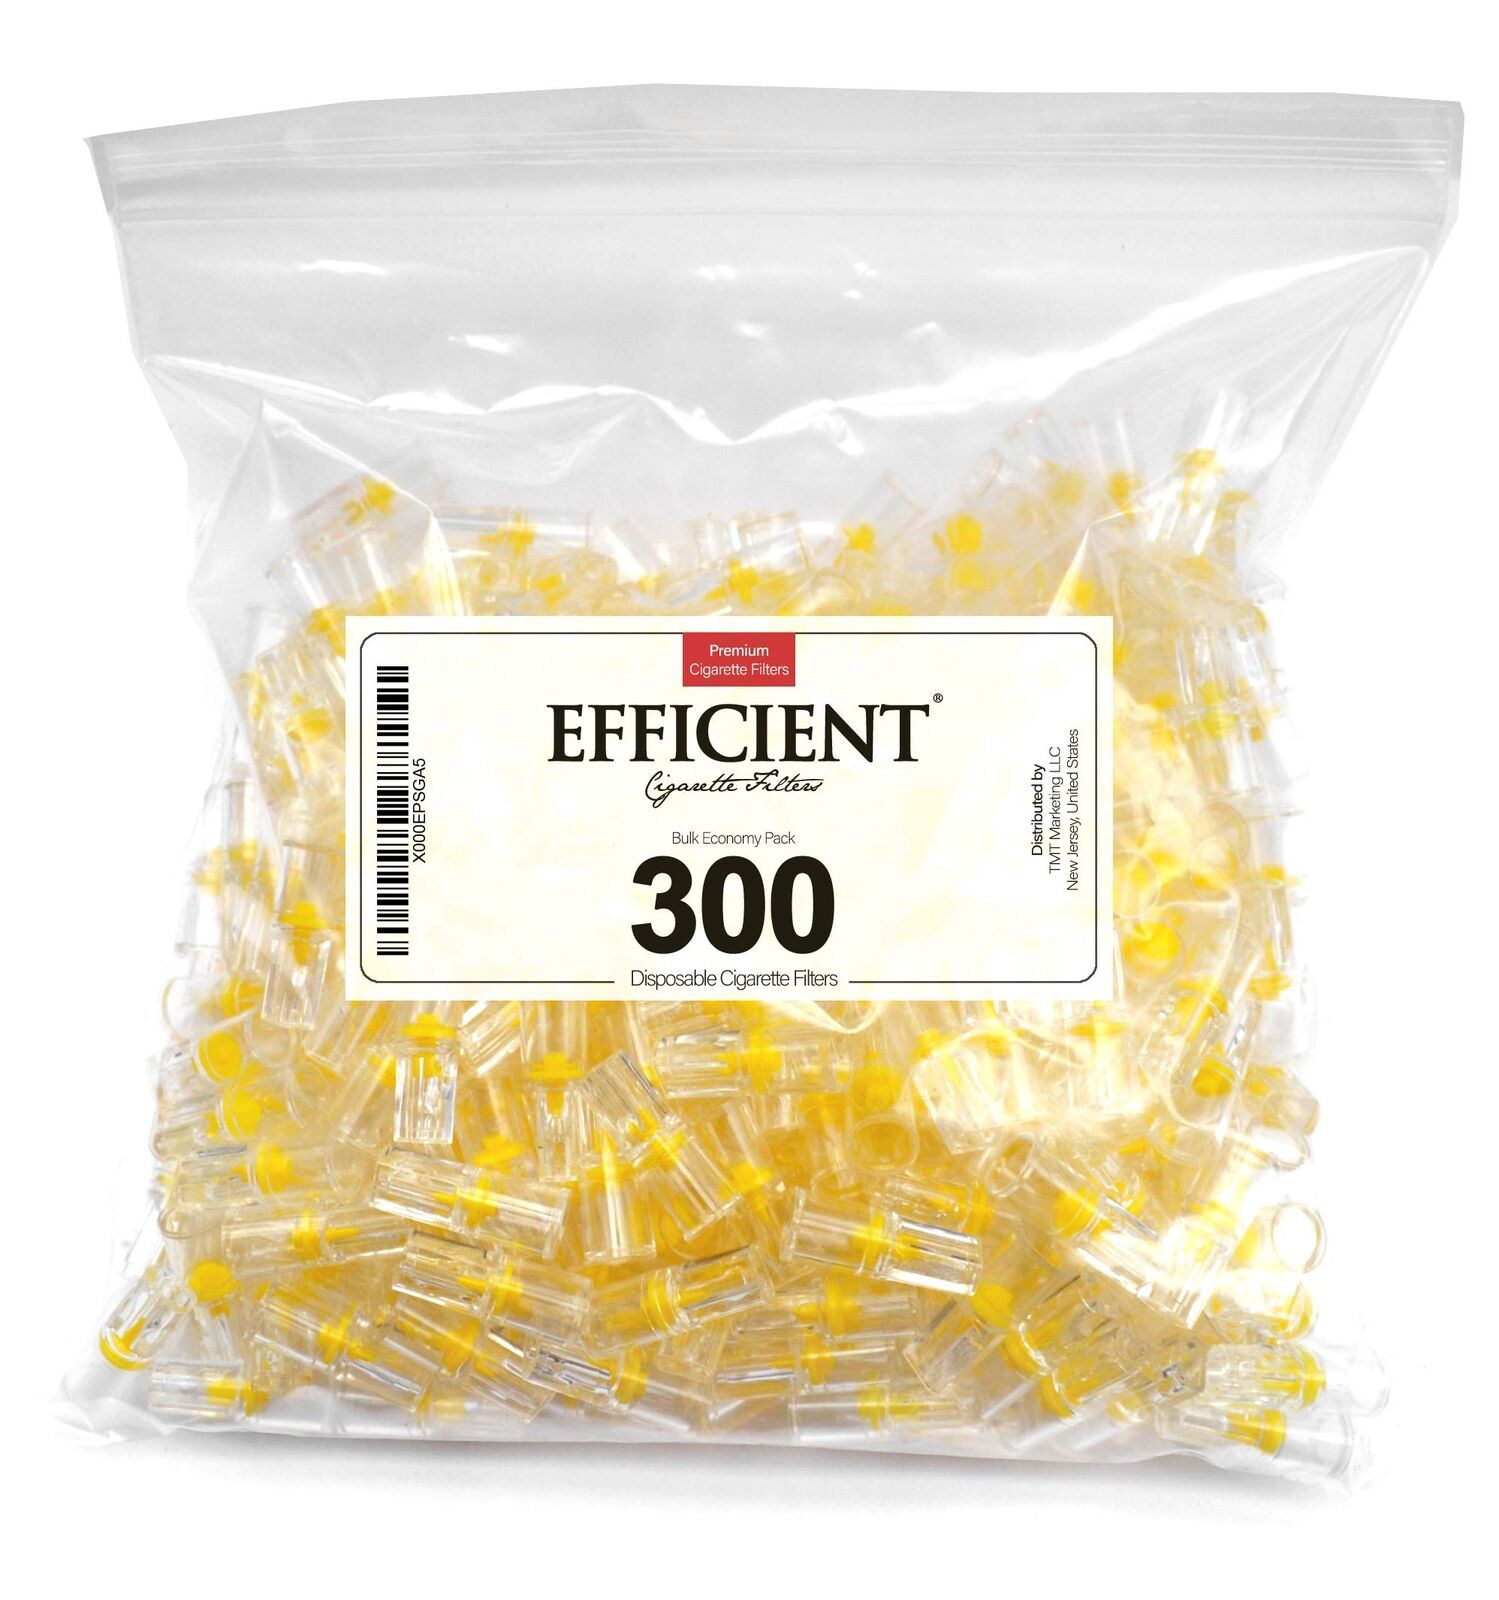 EFFICIENT Disposable Cigarette Filters Bulk Economy 300 Count (Pack of 1) 